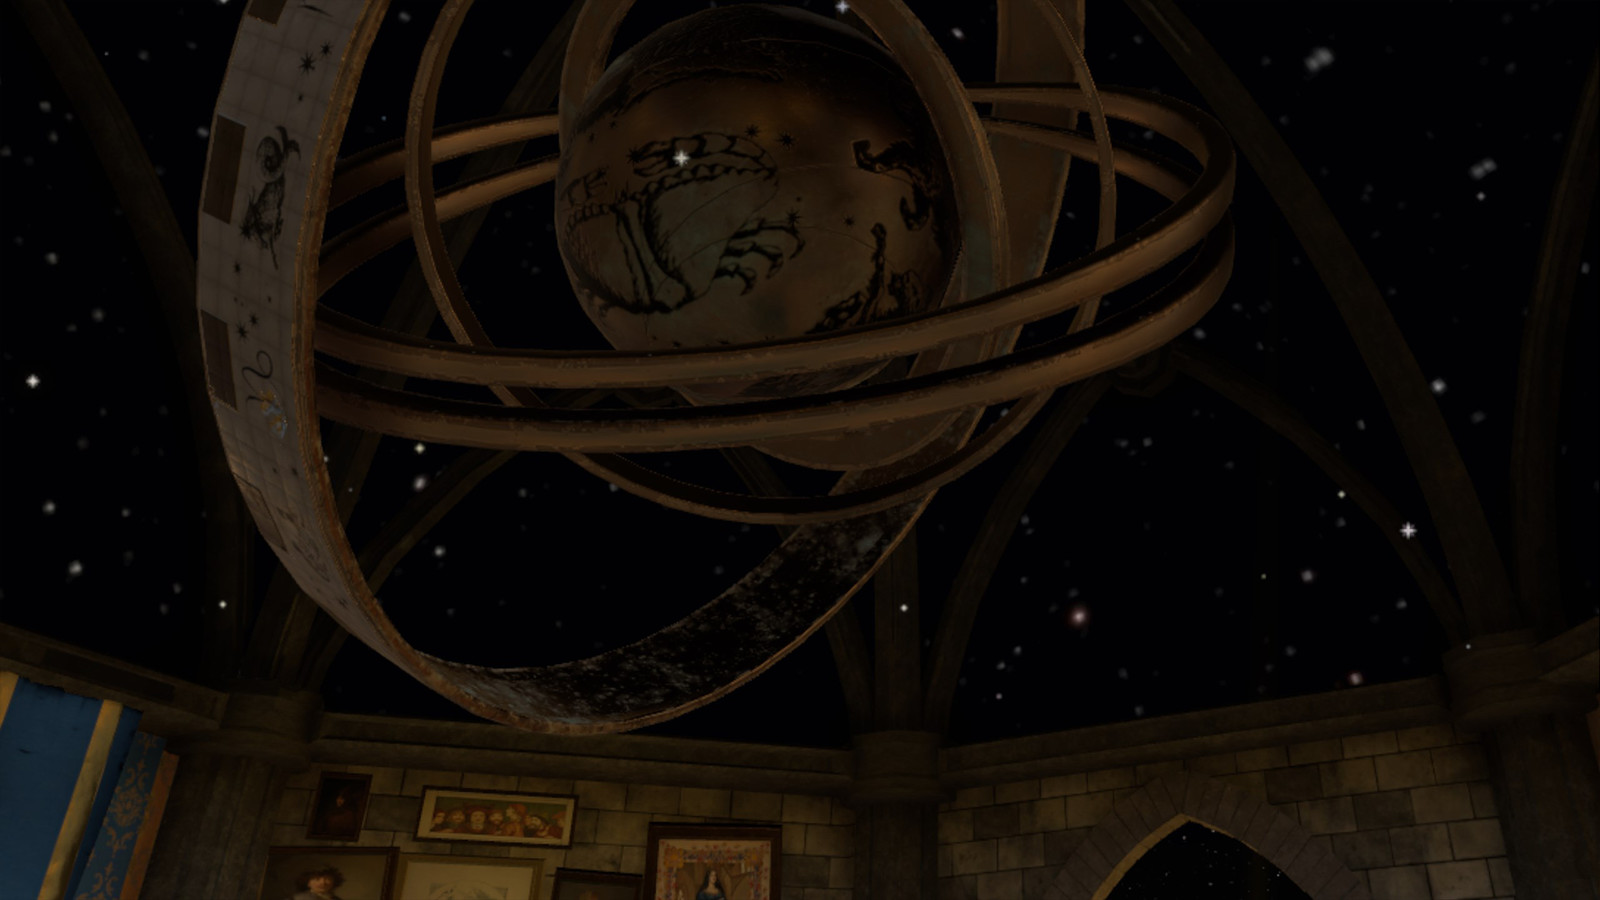 In-game screen capture - celestial globe